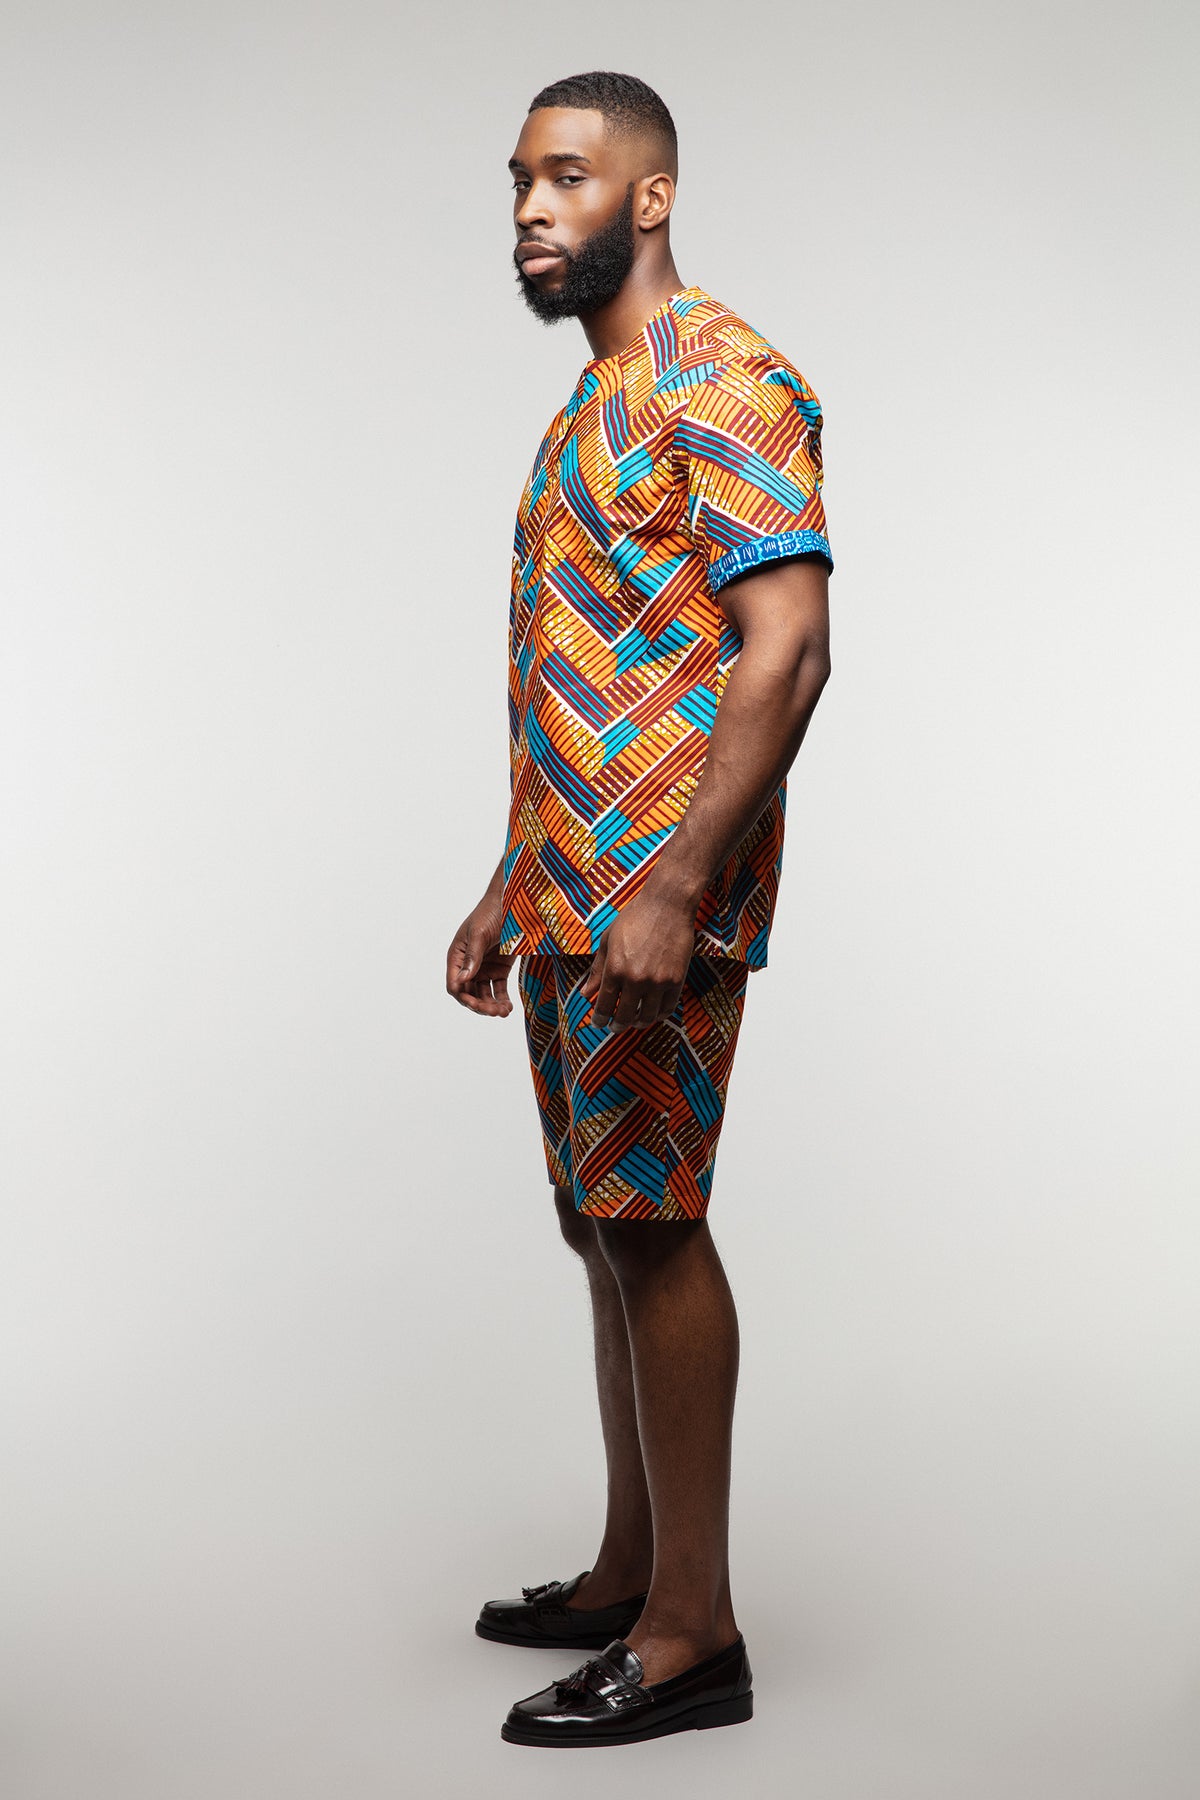 African print shirt ohema ohene